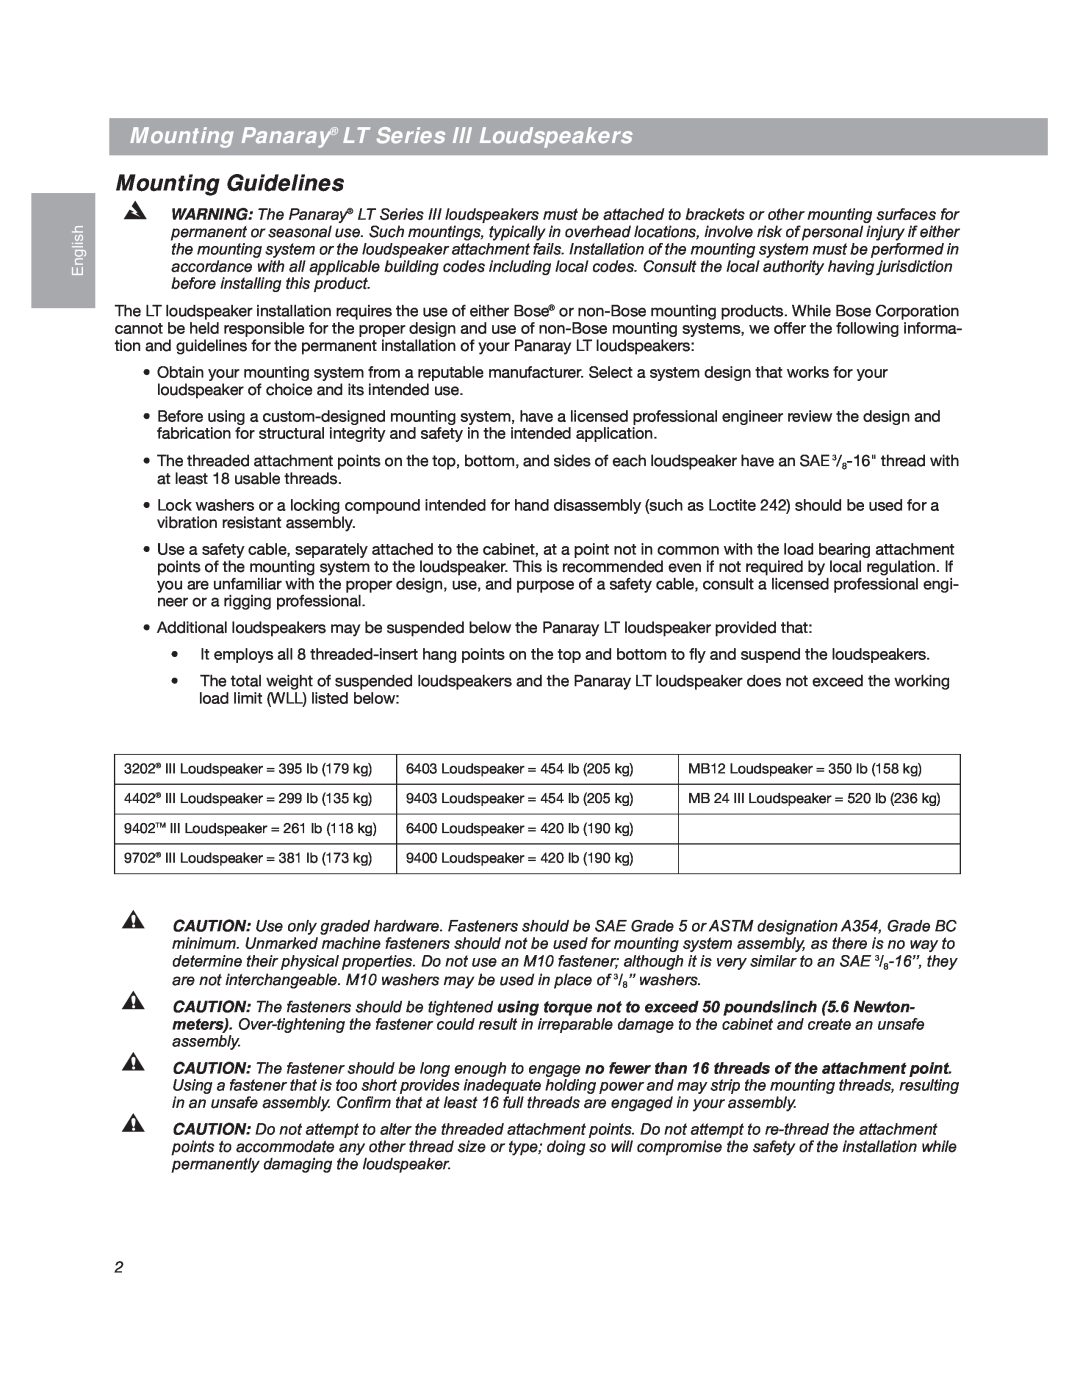 Bose LT3202 manual Mounting Panaray LT Series lll Loudspeakers, Mounting Guidelines, English 